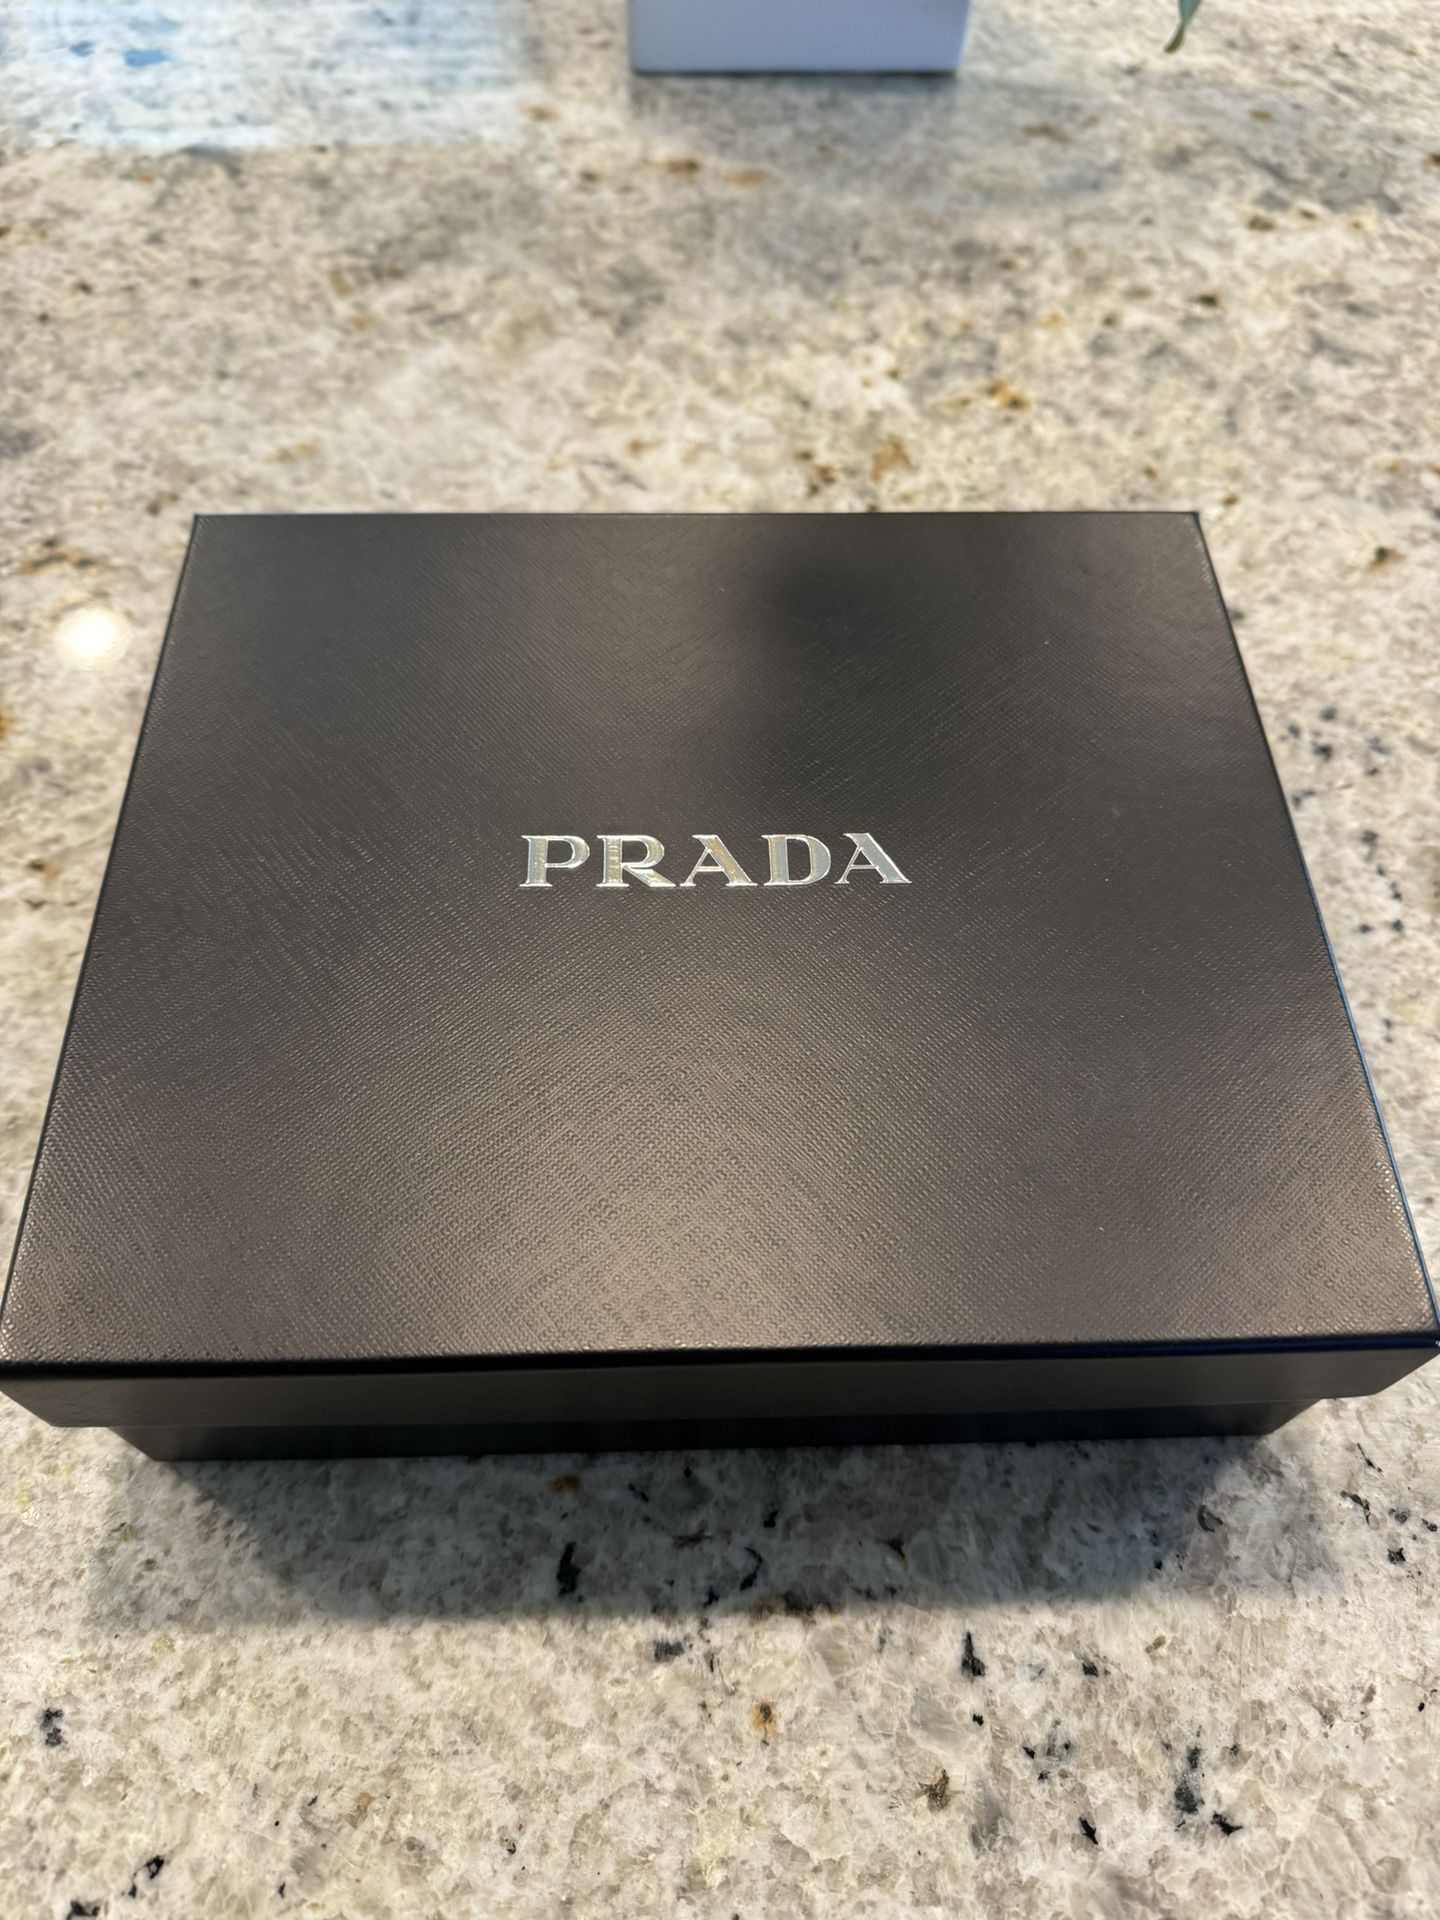 Prada Empty Box New